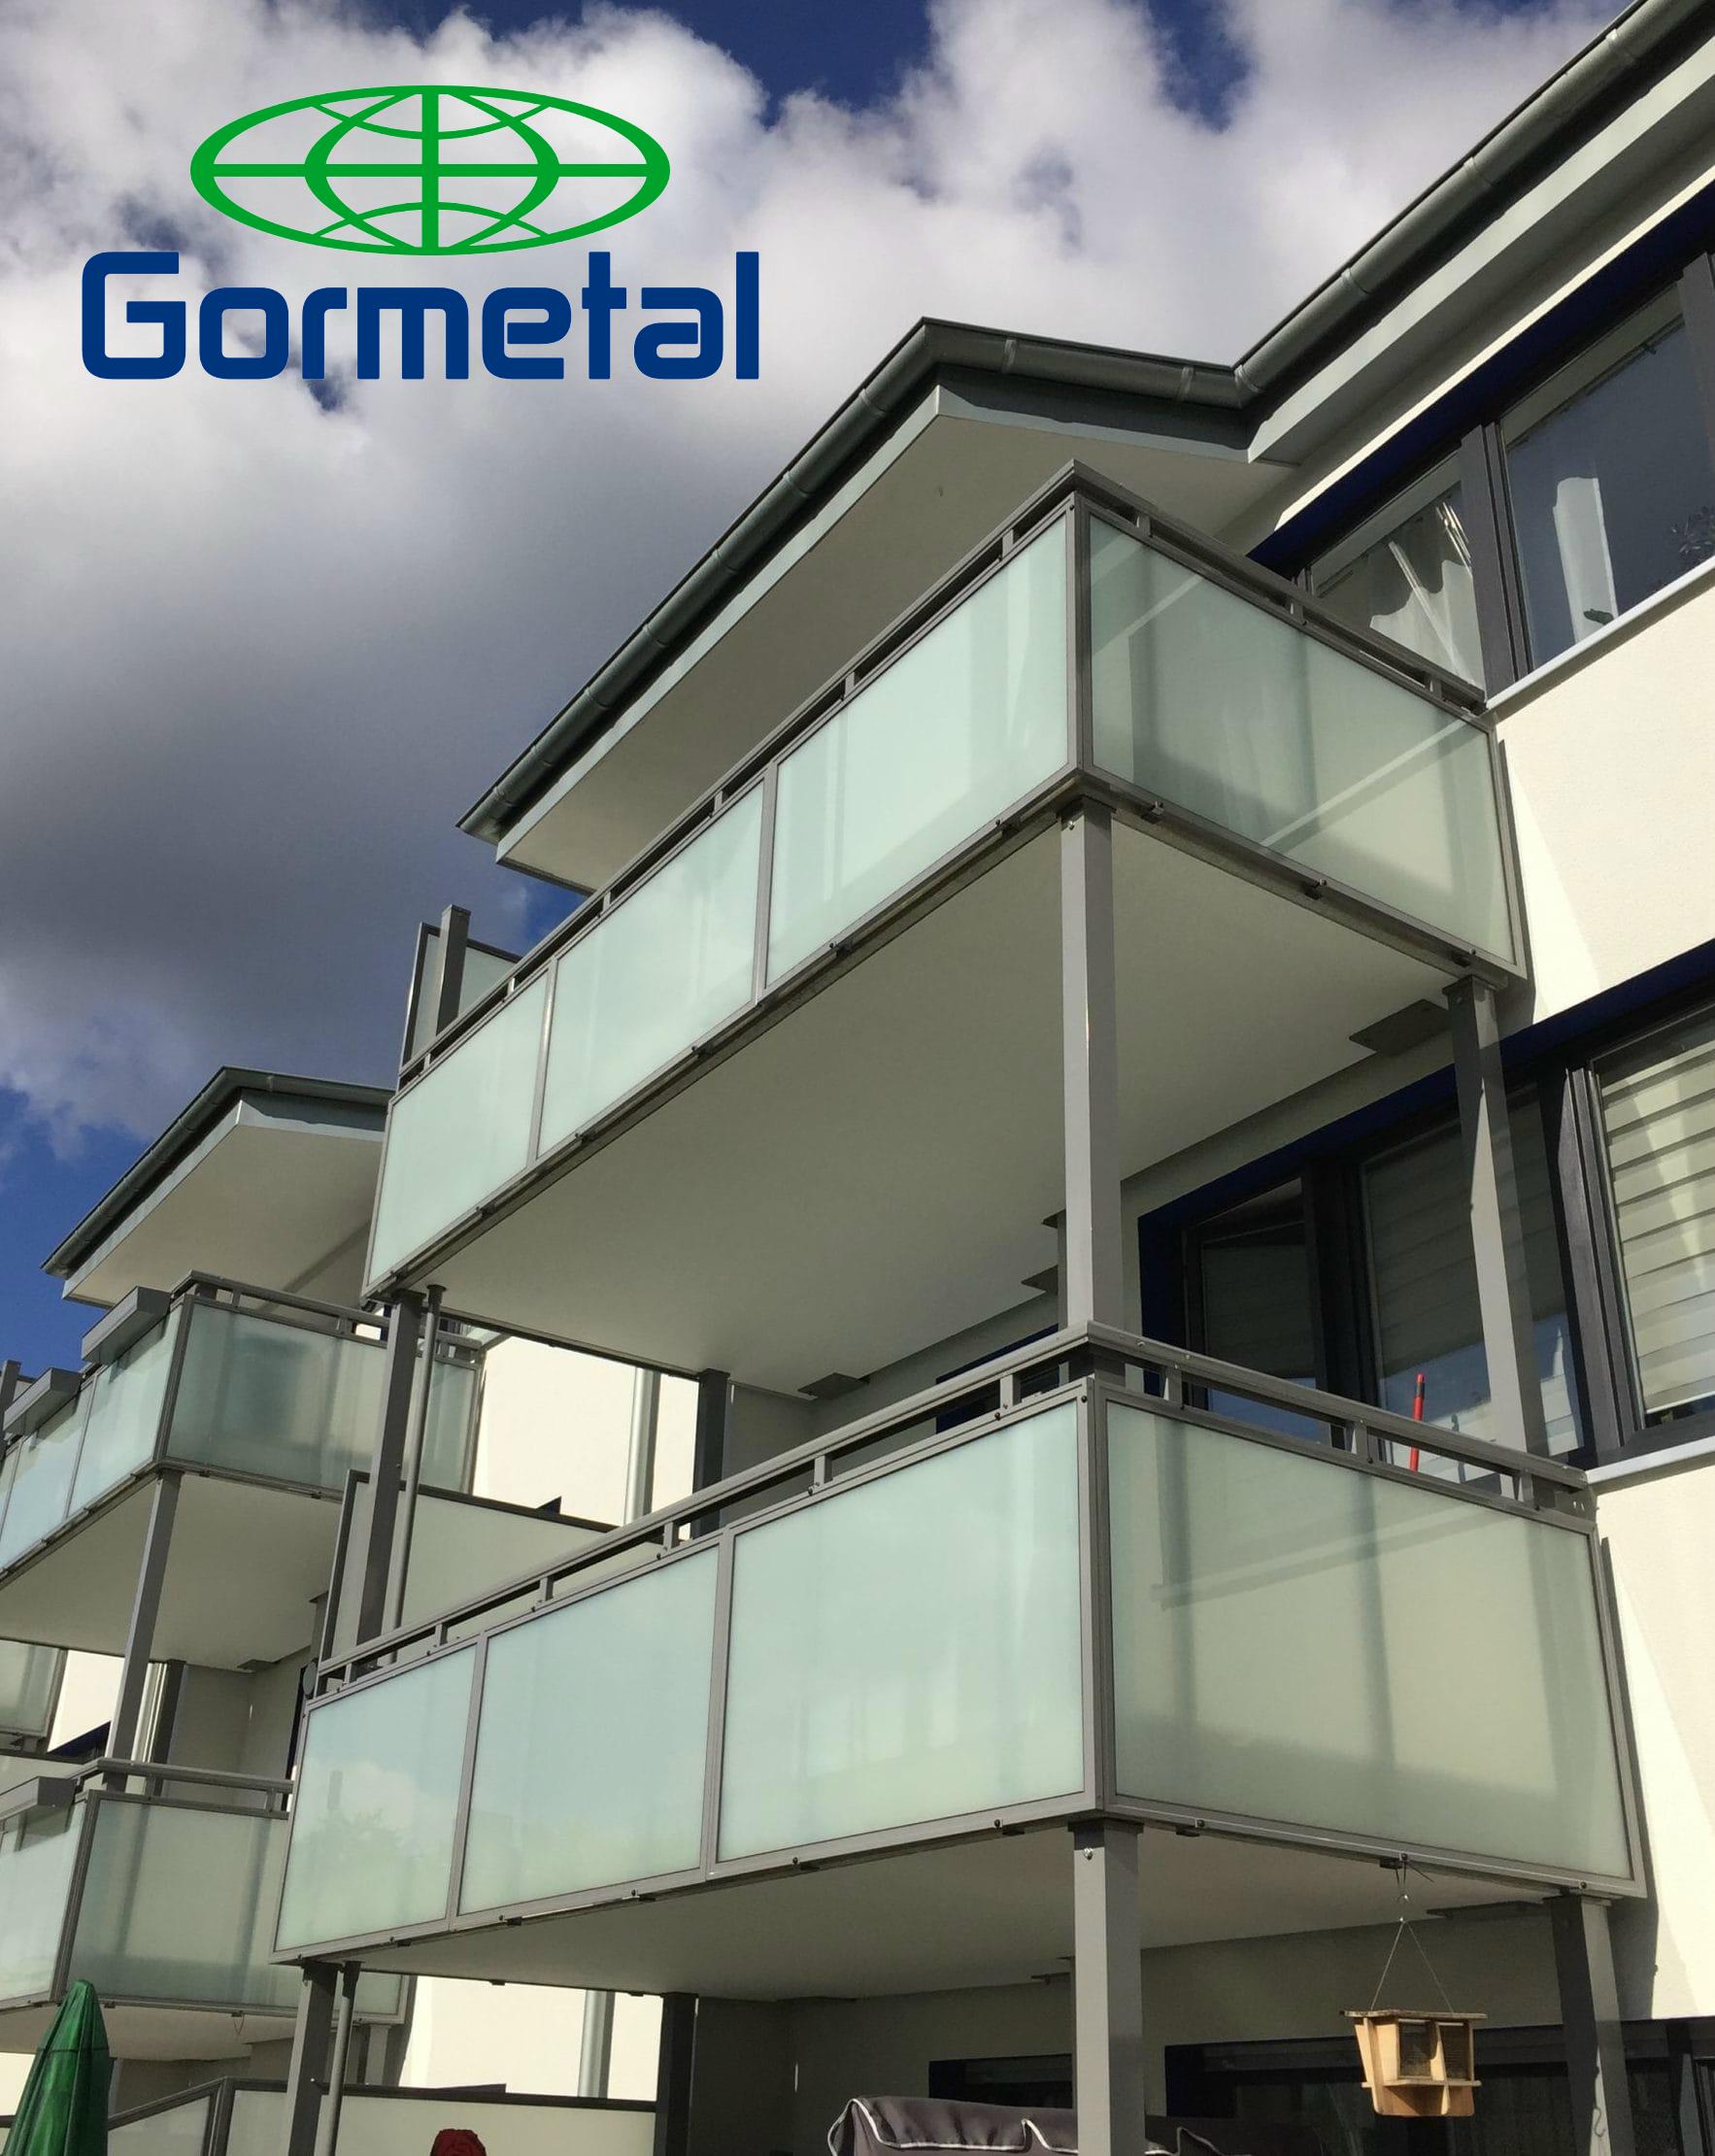 Balkony Gormetal